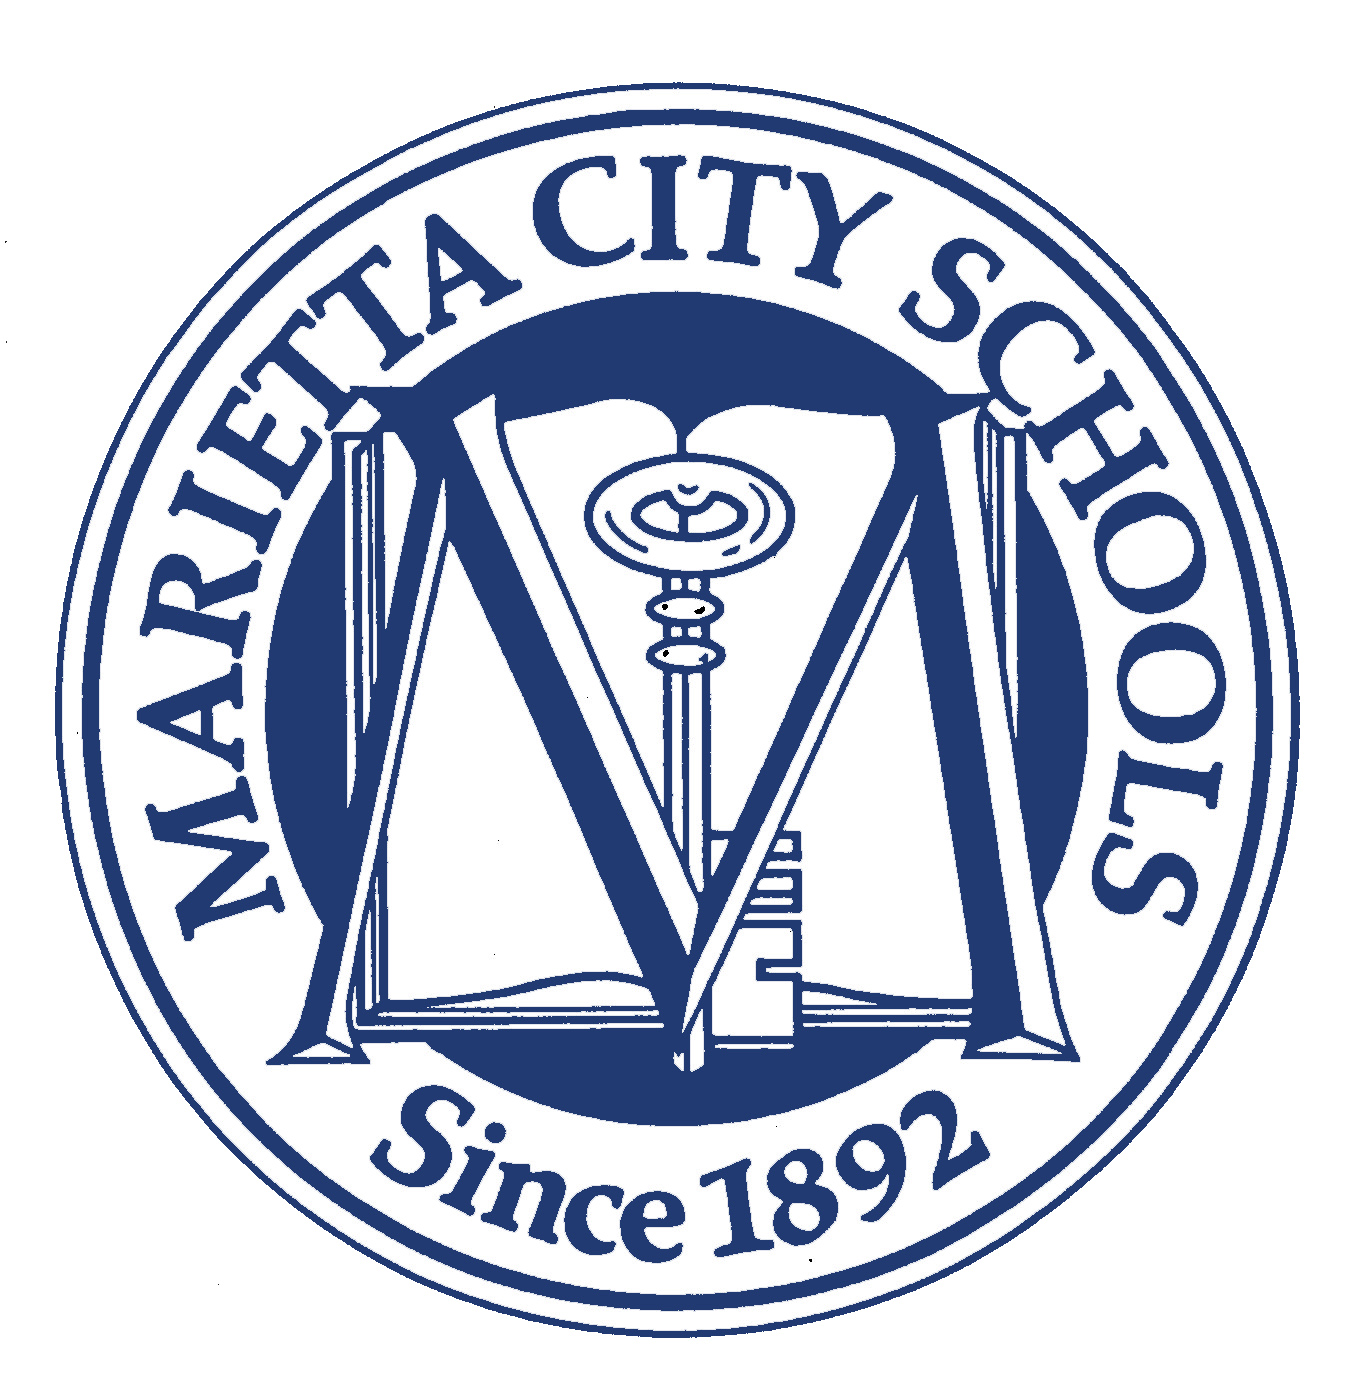 Marietta City Schools logo